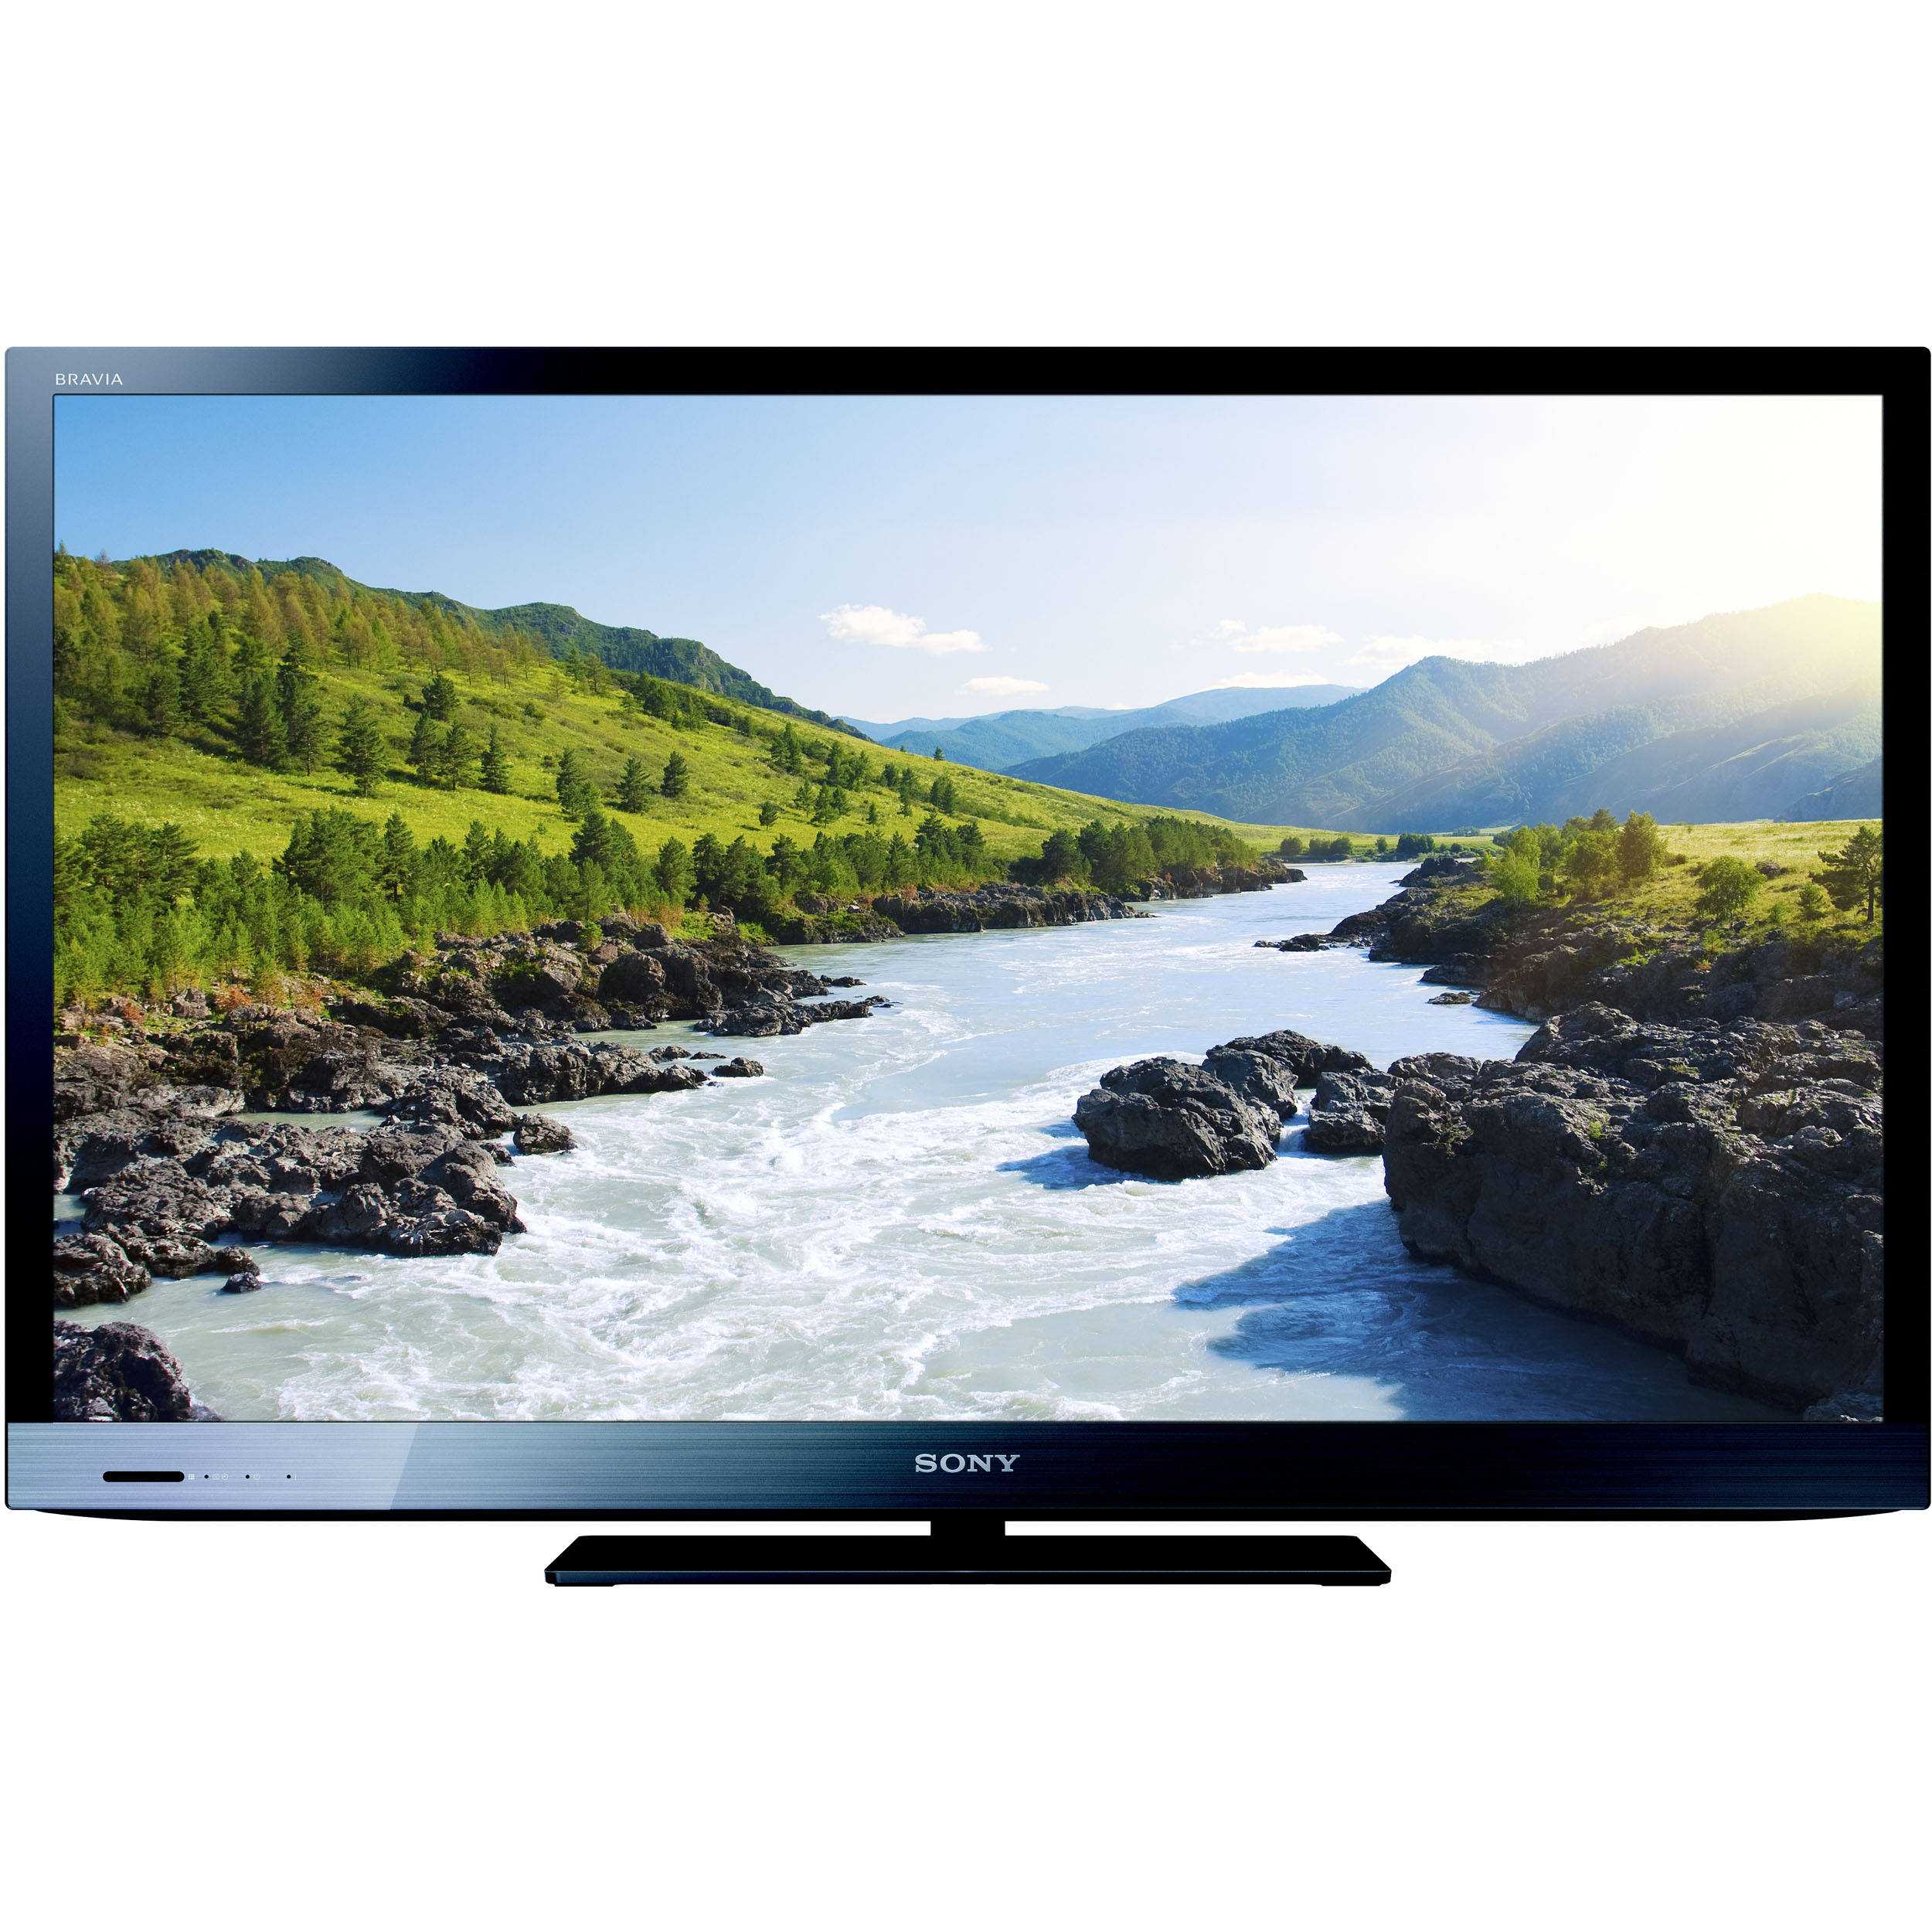 Жк телевизор 32" sony bravia kdl-32rd303 — купить, цена и характеристики, отзывы